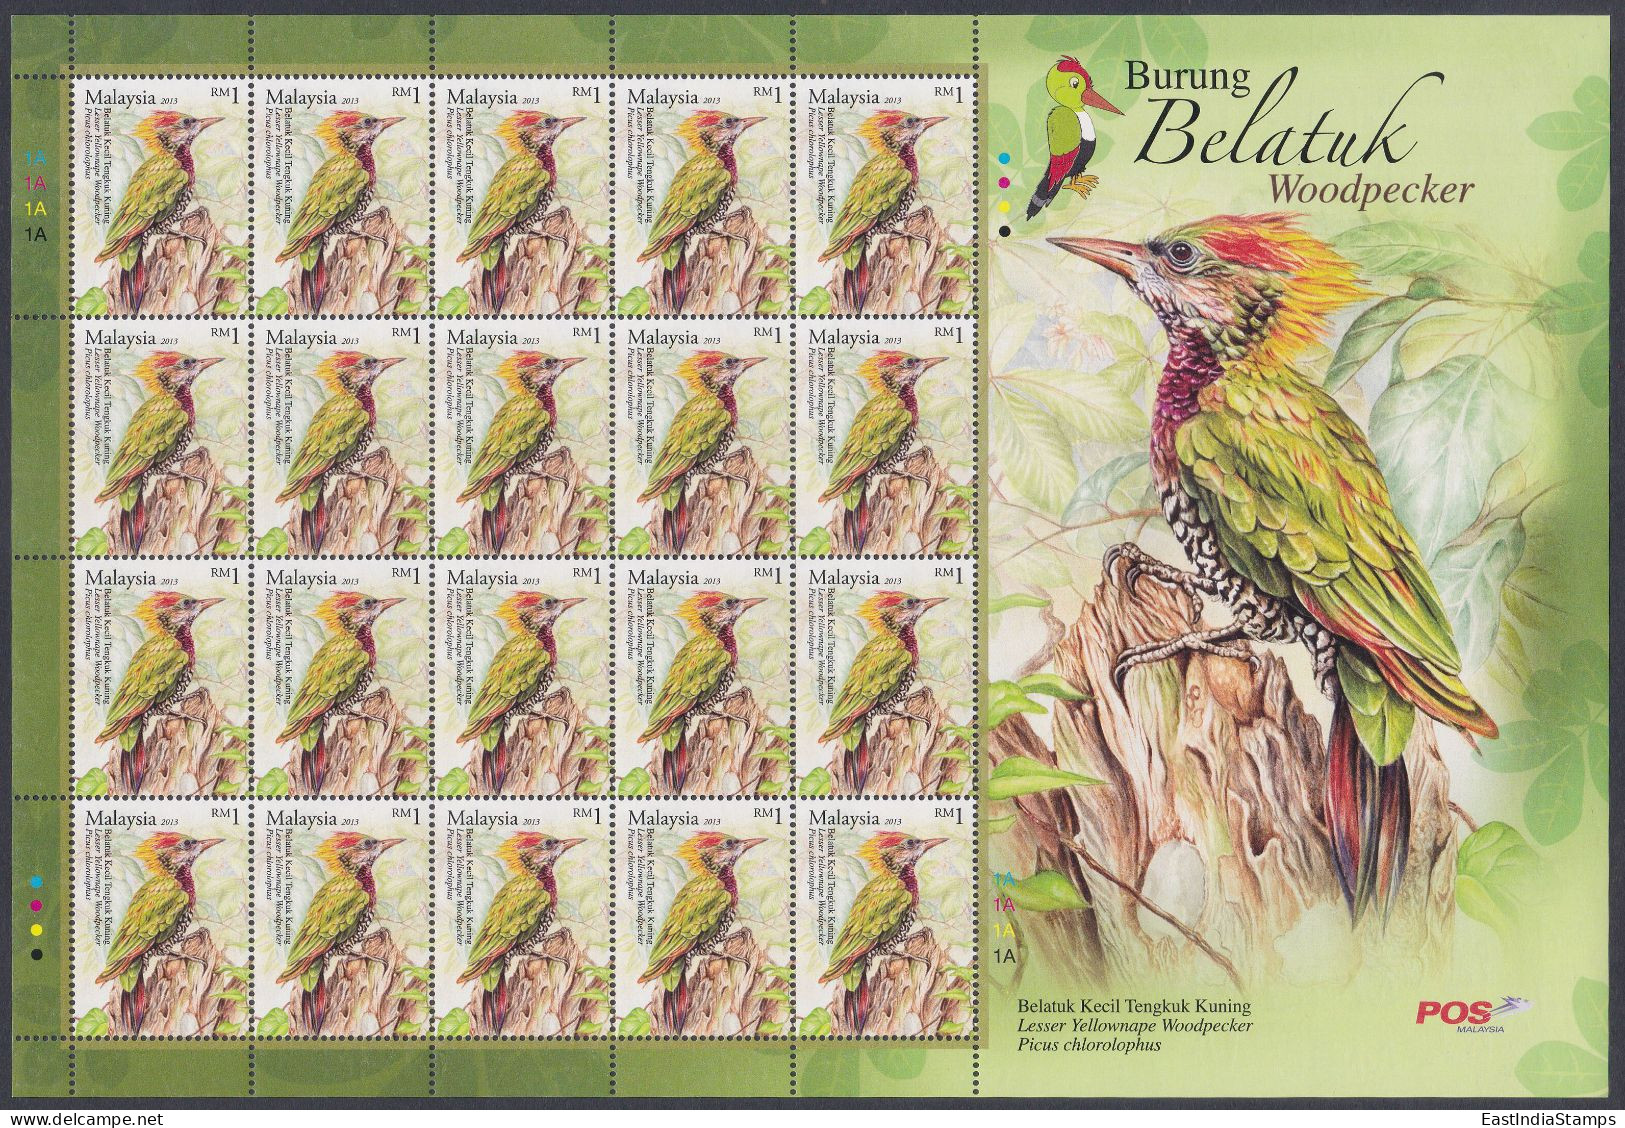 Malaysia 2013 MNH Lesser Yellownape Woodpecker, Bird, Birds, Burung Belatuk, Sheet - Malaysia (1964-...)